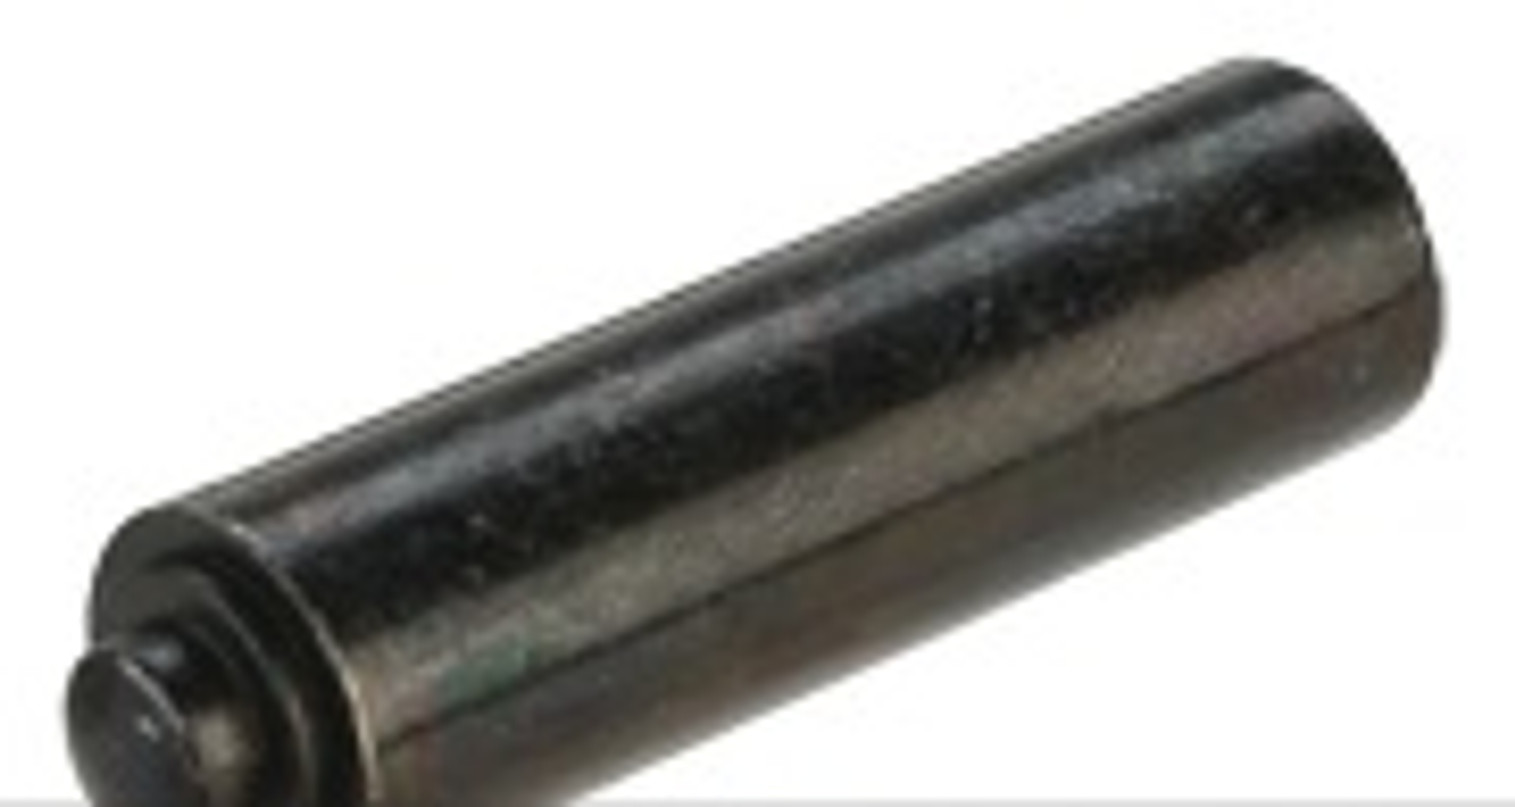 WE-Tech OEM Replacement Recoil Spring Cap For TT33 Series GBB Pistols - Part #39